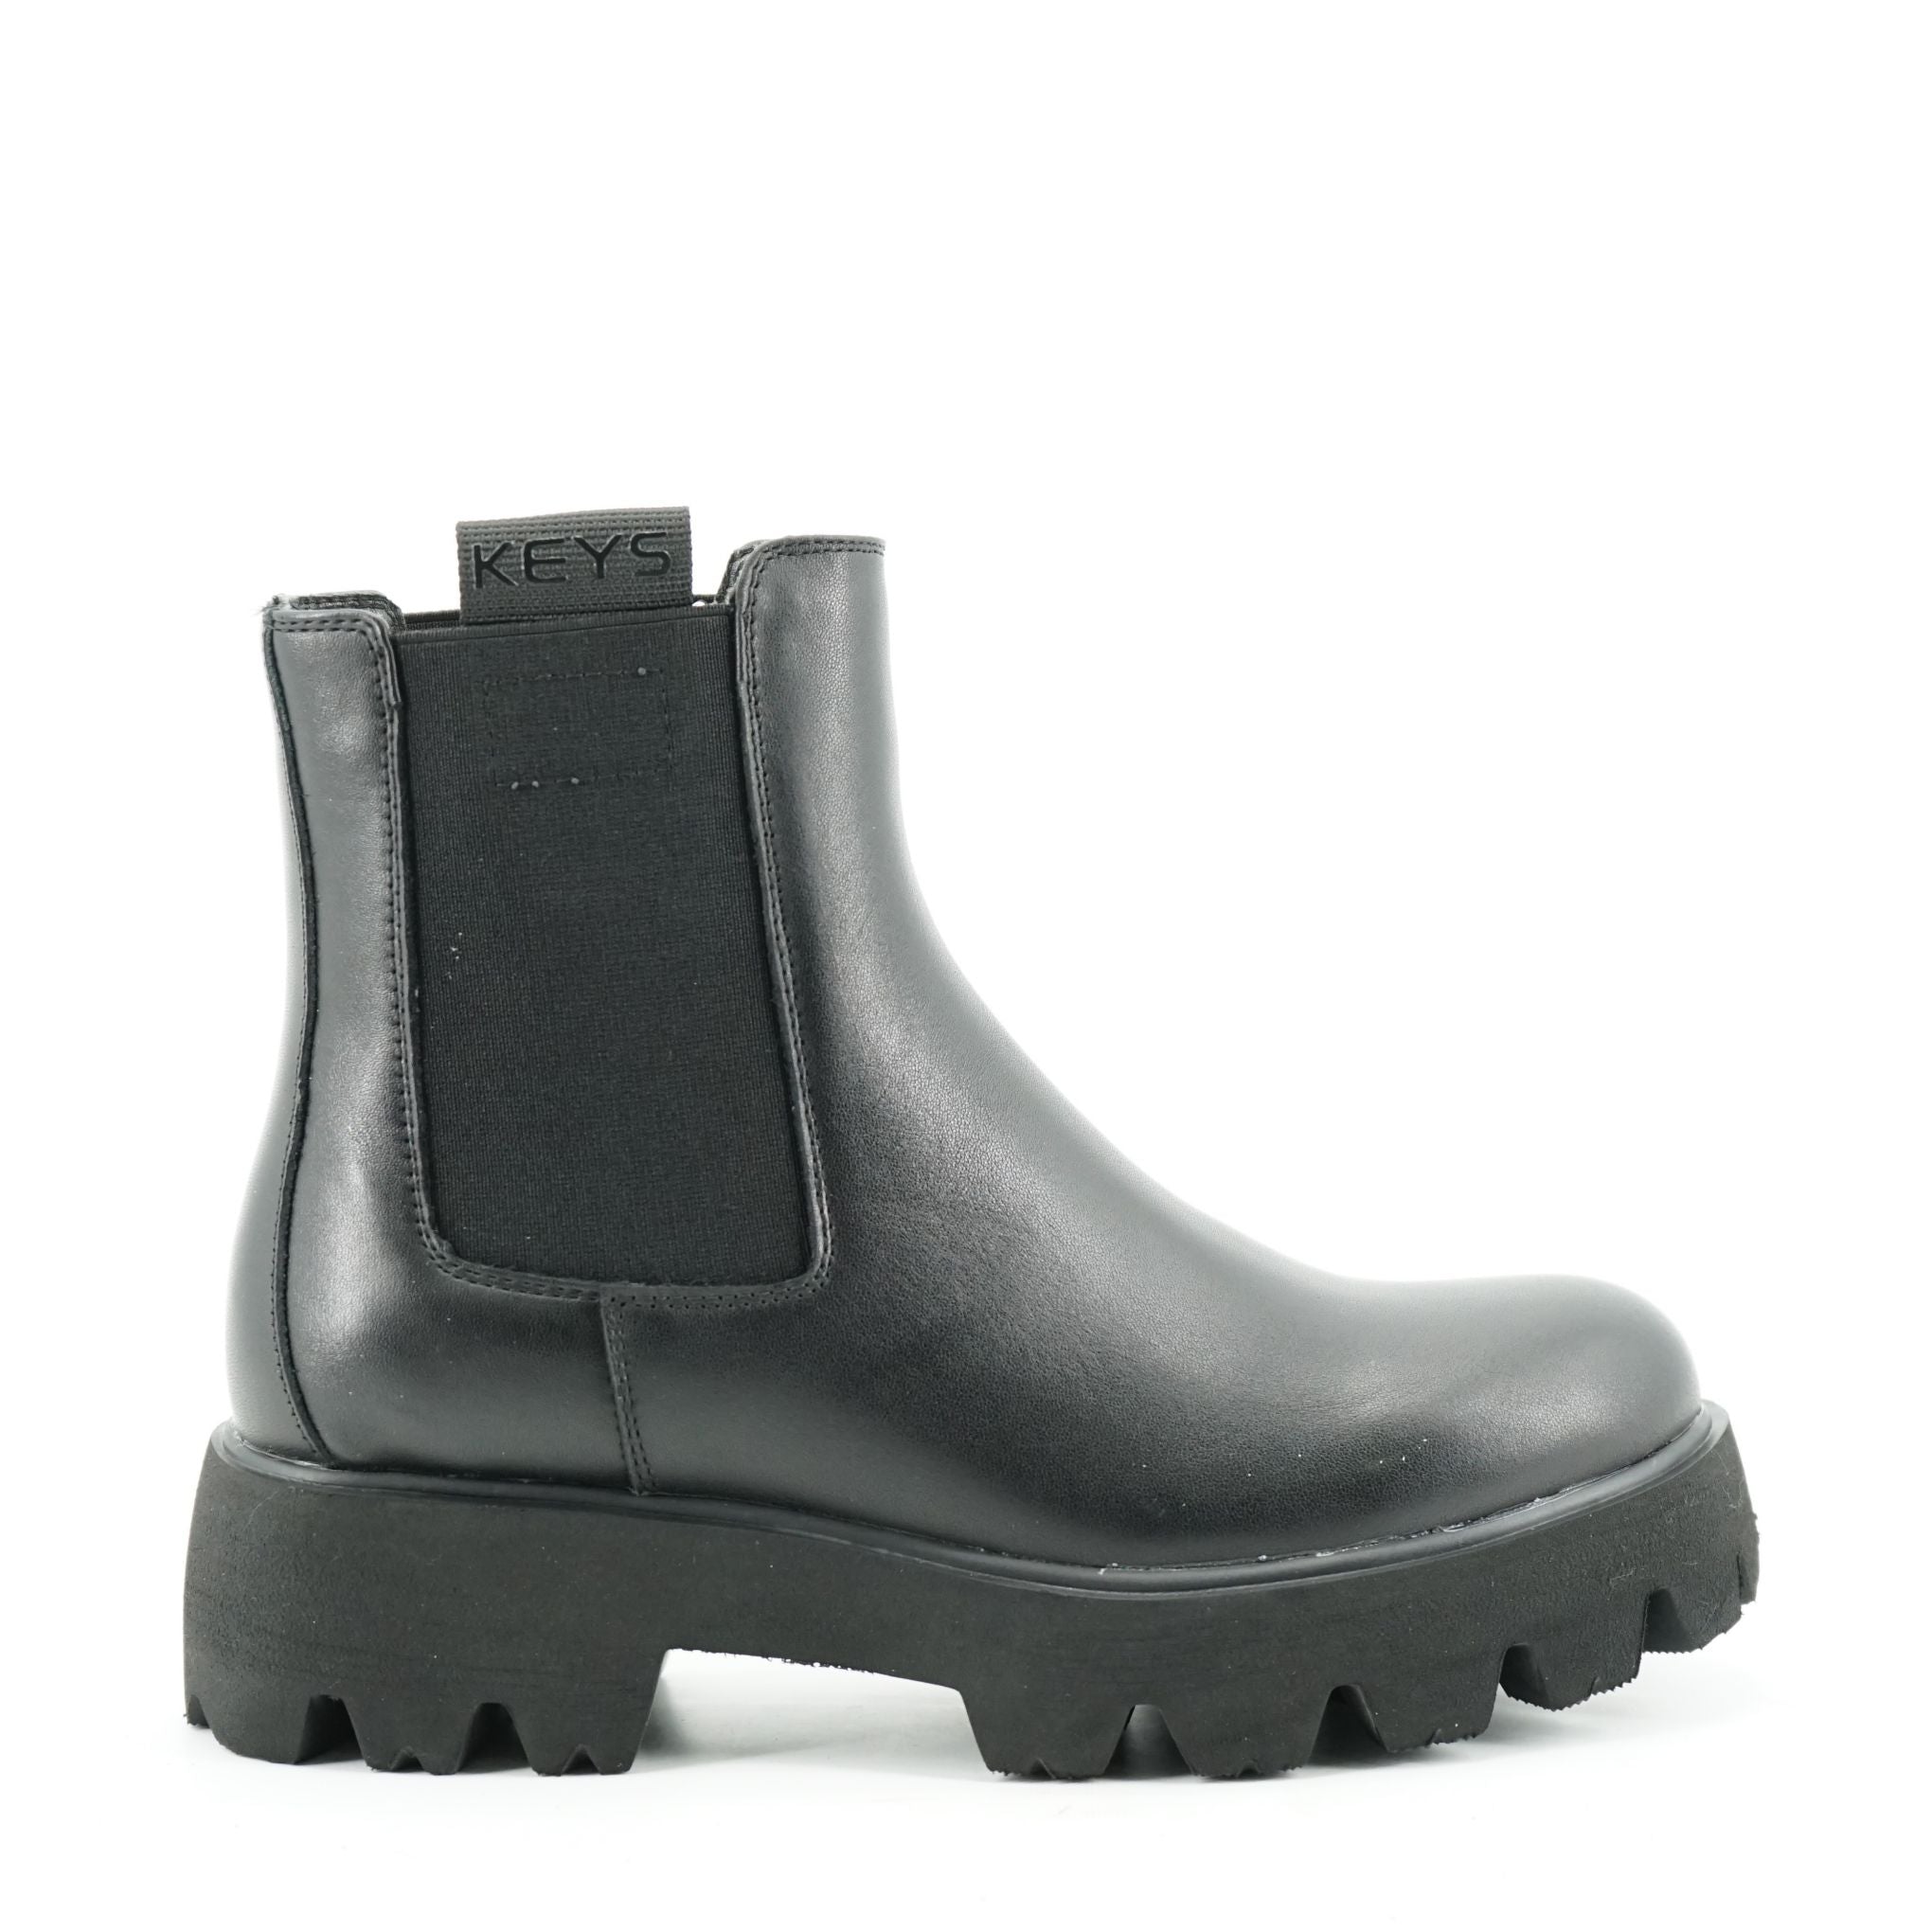 Anfibi/Stivaletti Chelsea boots Keys con platform in pelle: K-8622